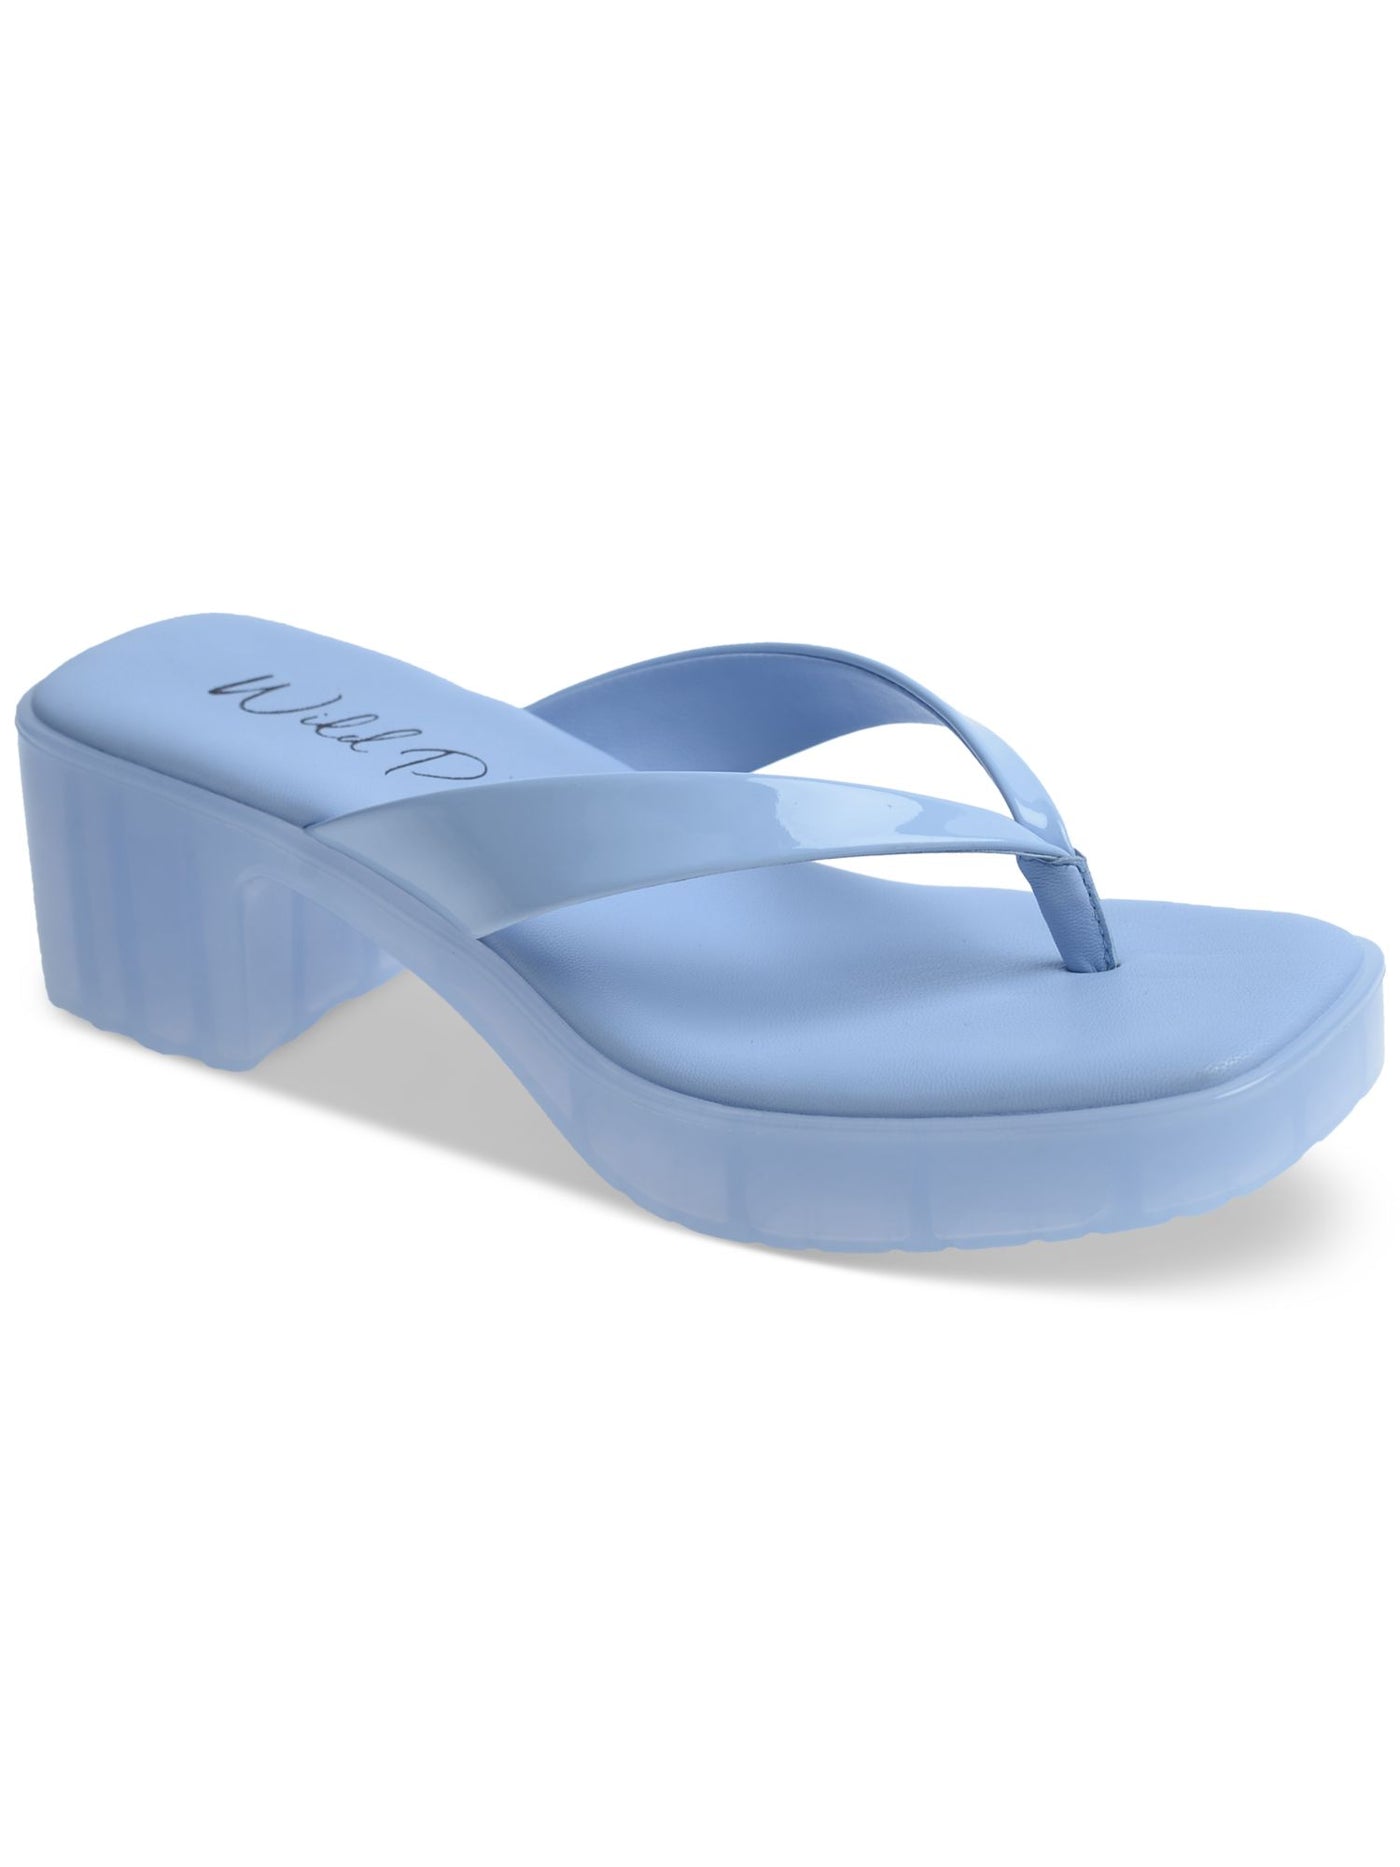 WILD PAIR Womens Light Blue 1" Platform Padded Apolo Square Toe Block Heel Slip On Dress Heeled Thong Sandals 7 M